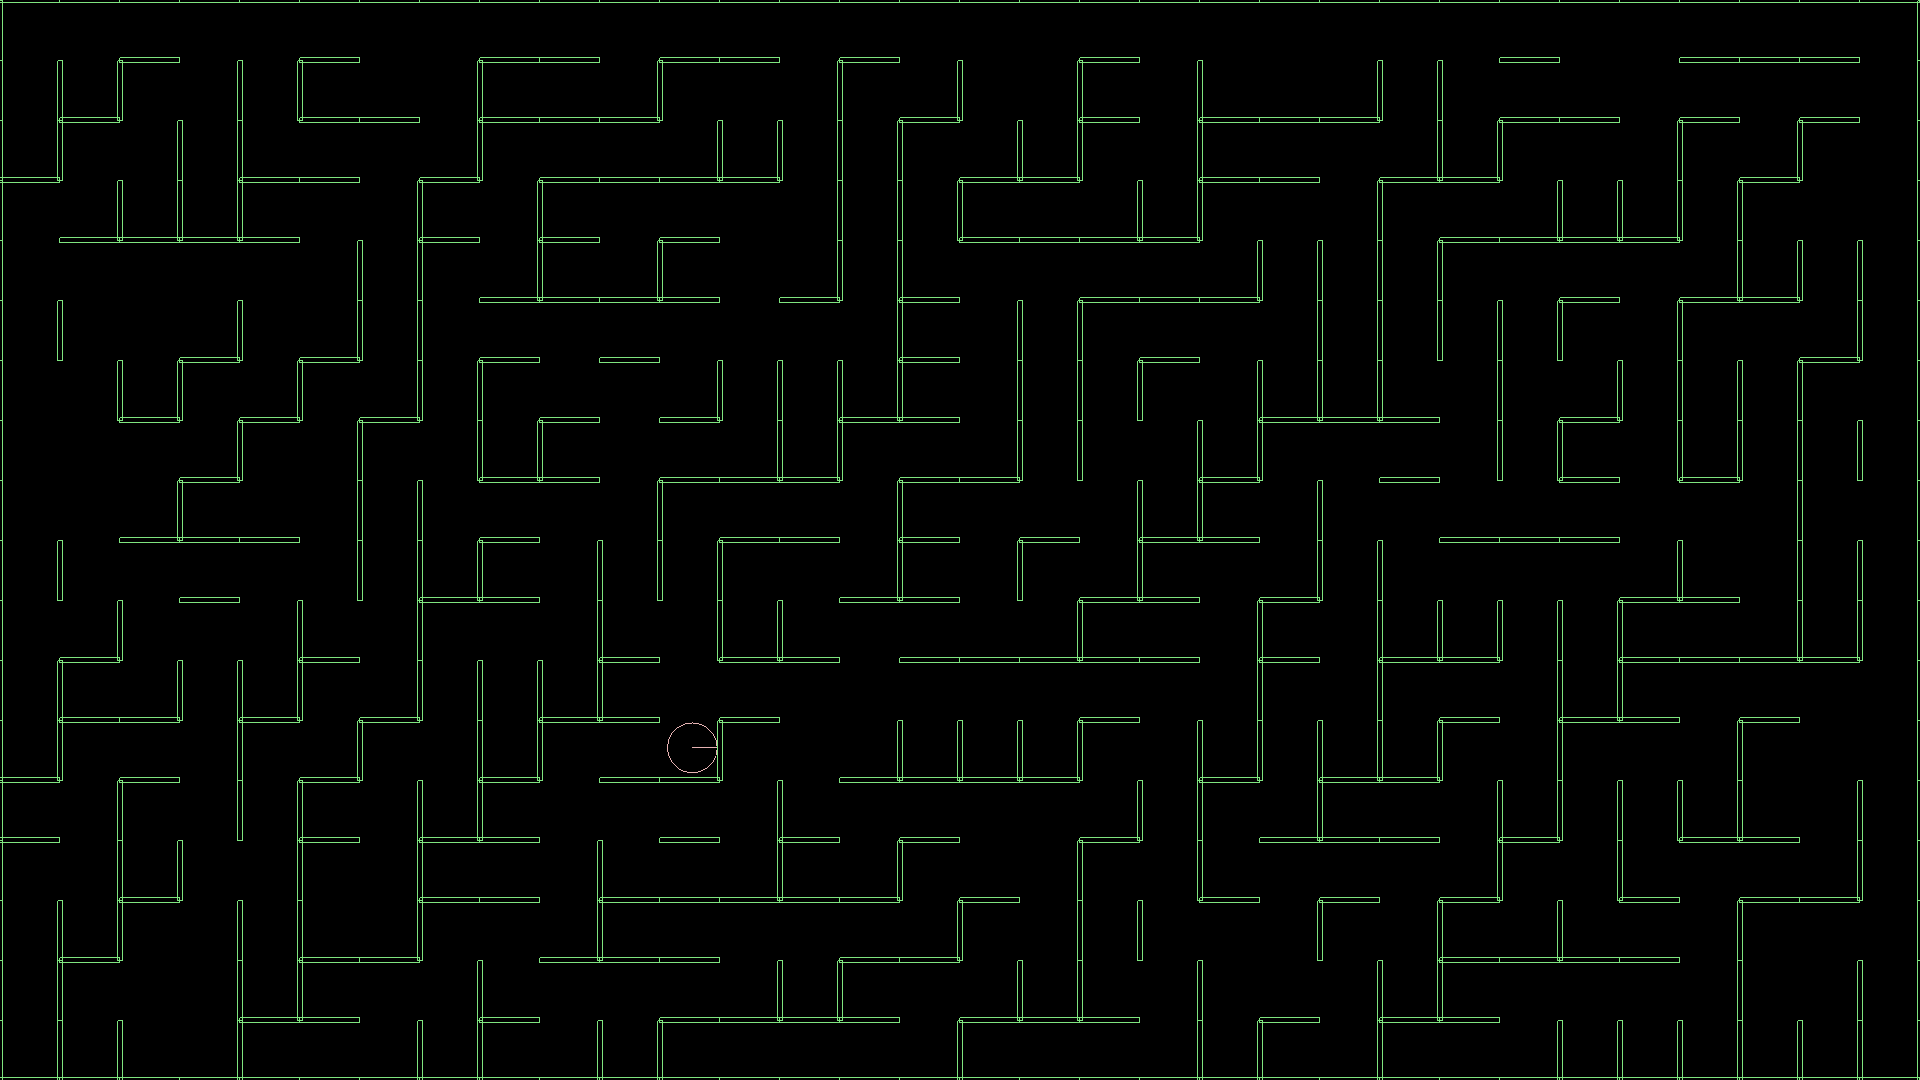 modified binary tree maze